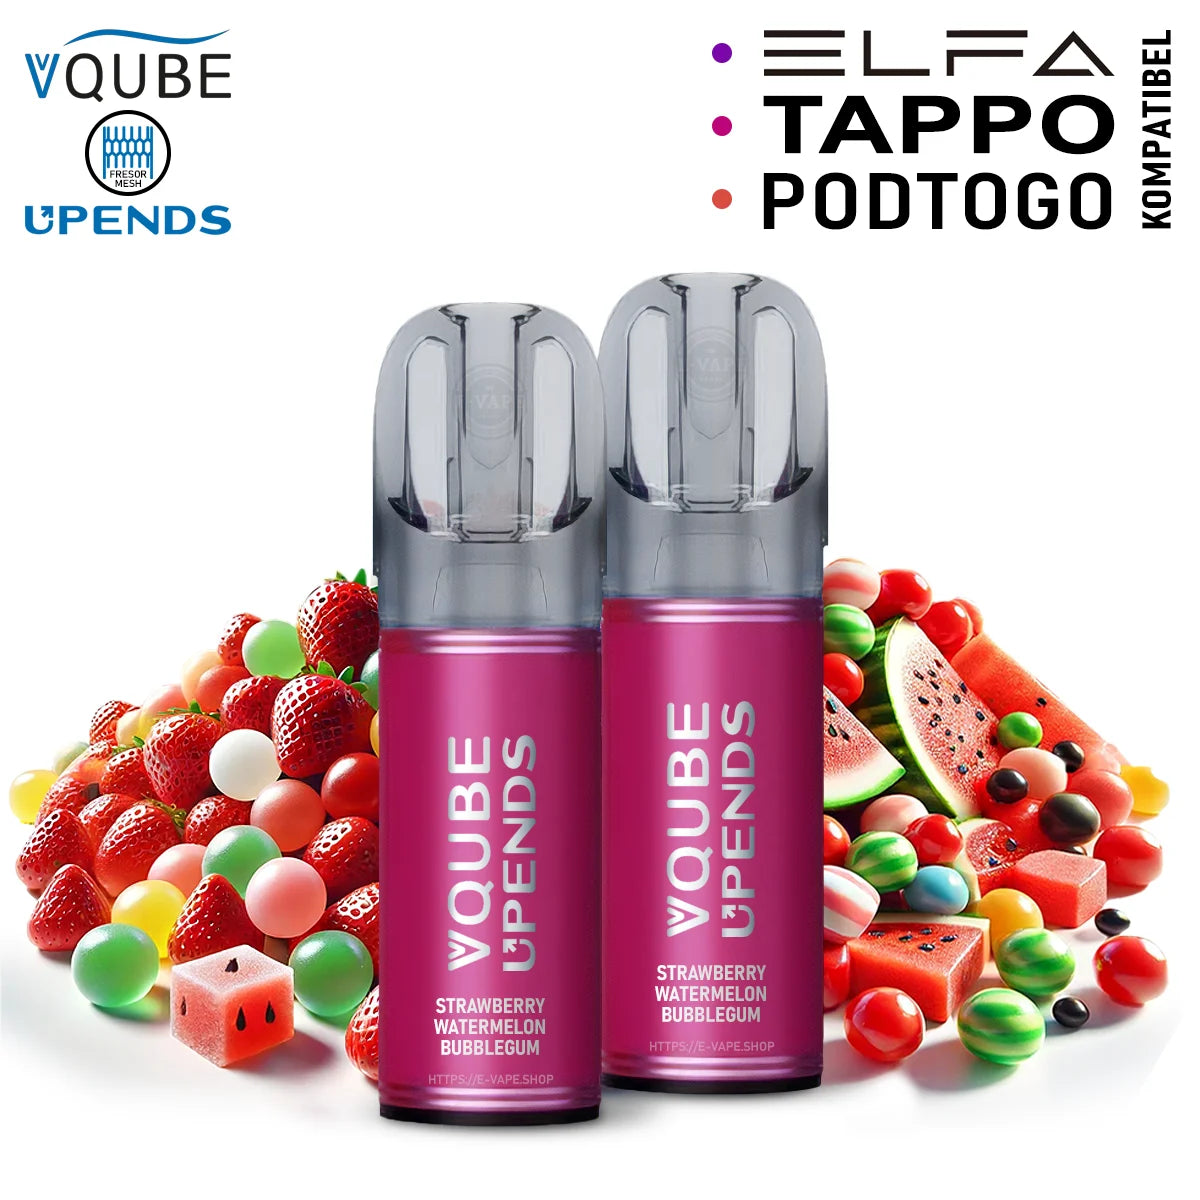 Vqube Upends Pod Strawberry Watermelon Bubblegum 20mg ELFA / Tappo / Pod2Go